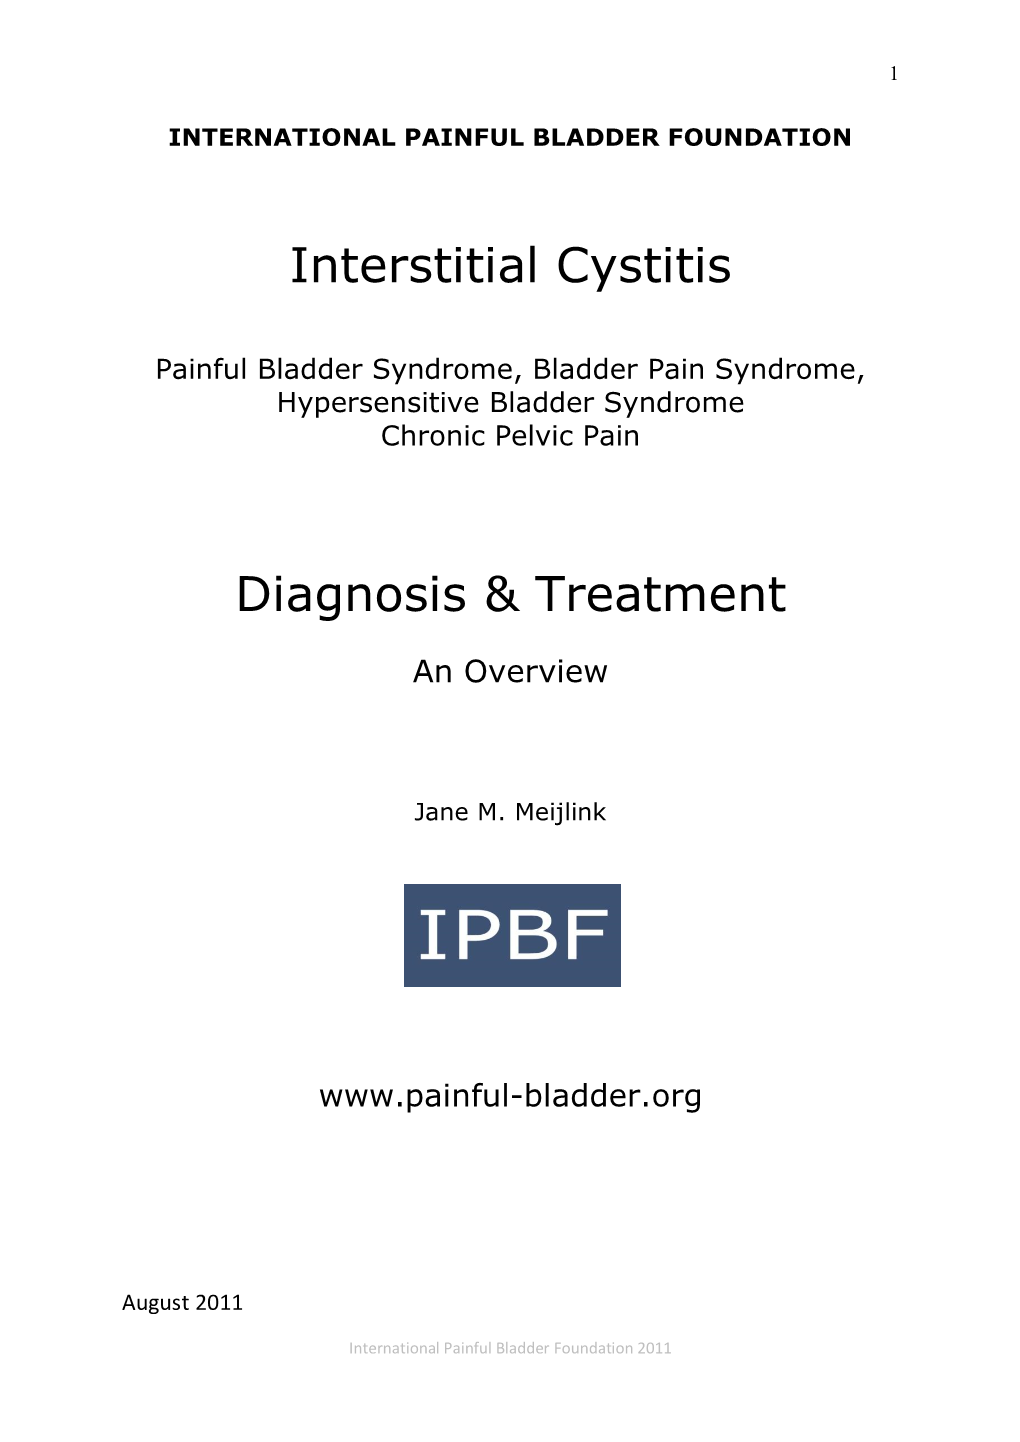 Interstitial Cystitis Diagnosis & Treatment